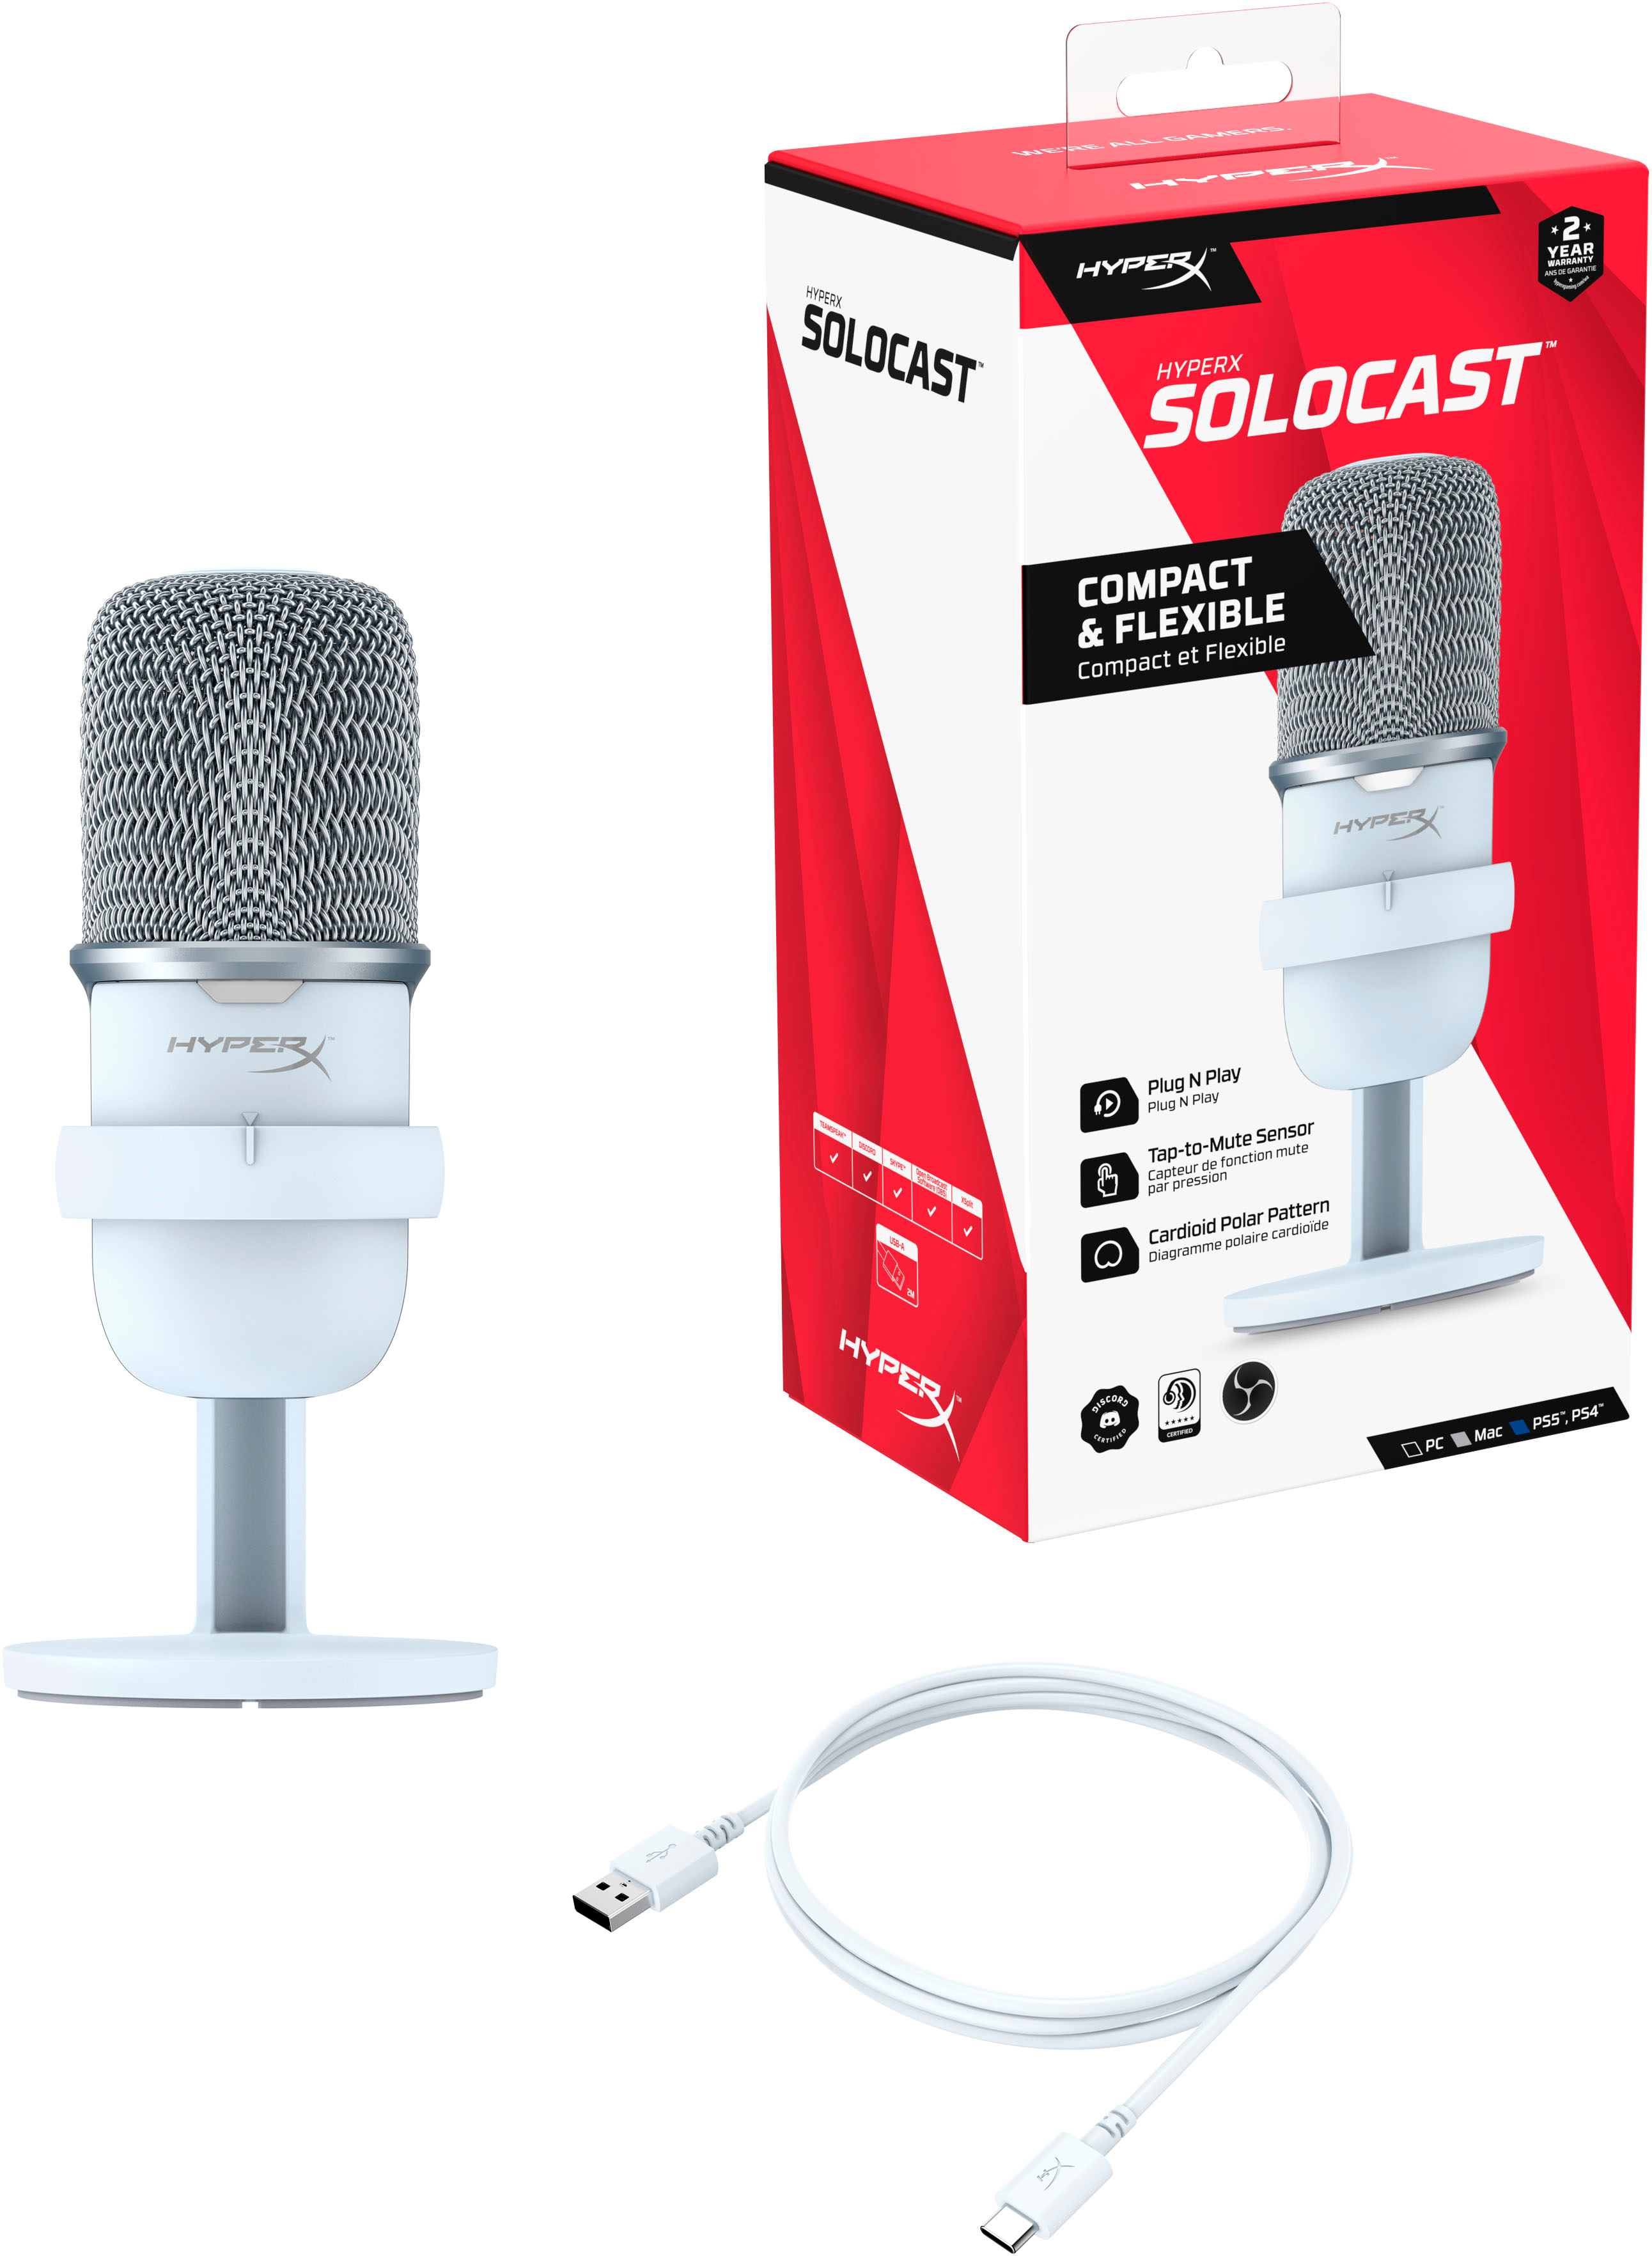 HyperX SoloCast USB Microphone Review